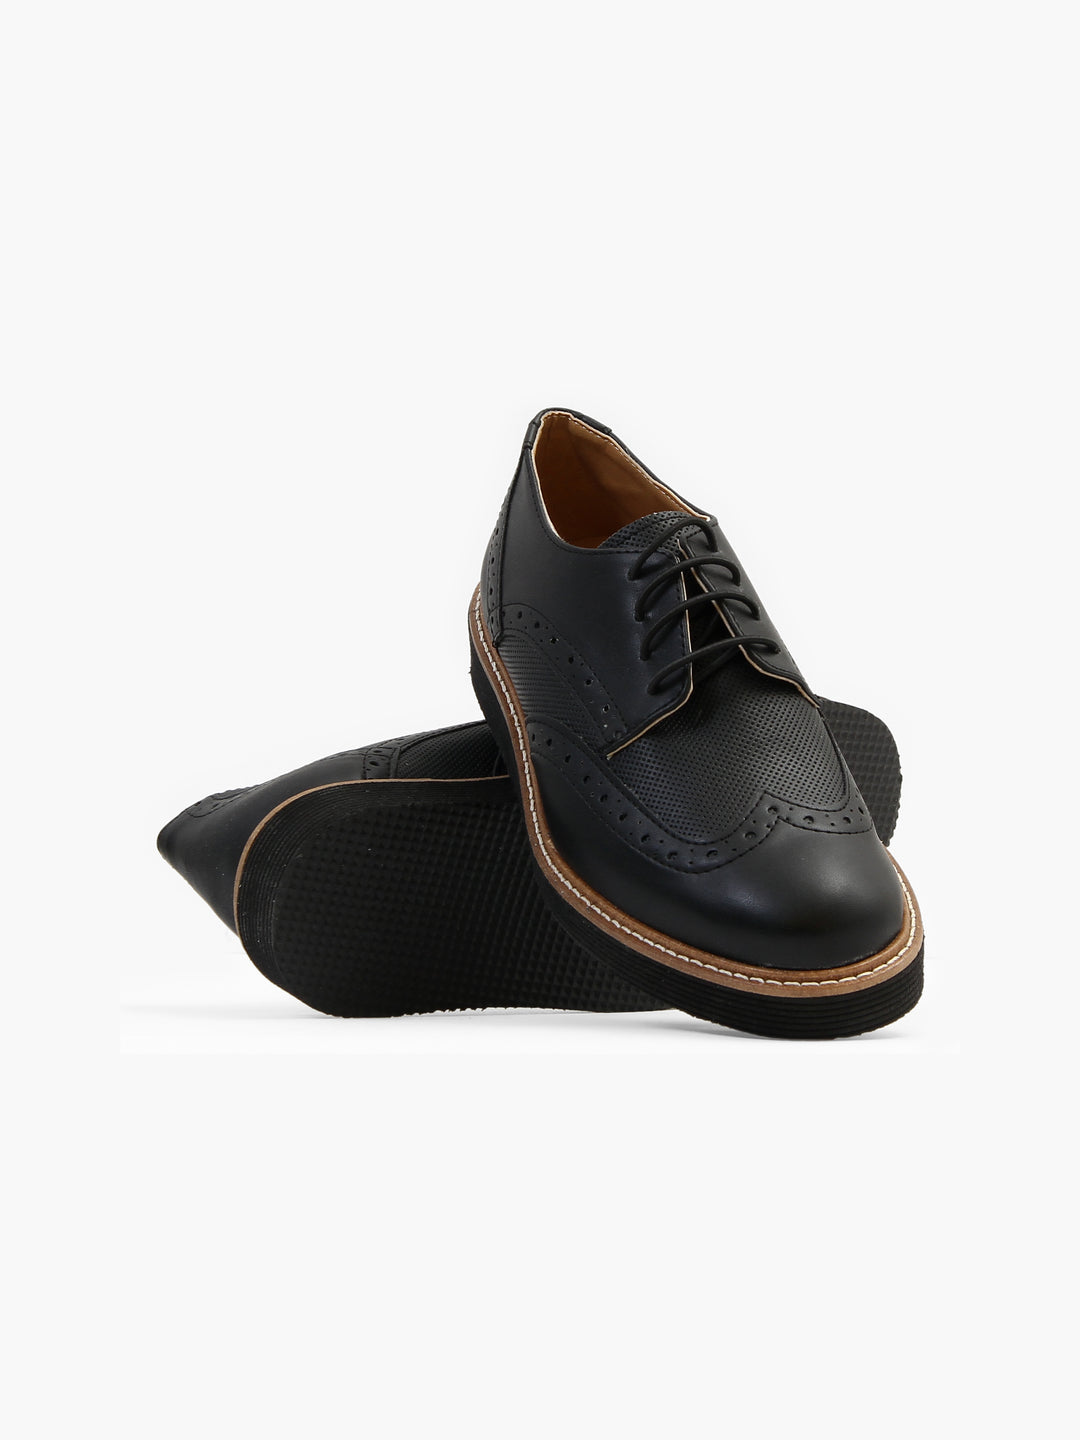 Harli Boys Dress Shoes #571-F (W-22)